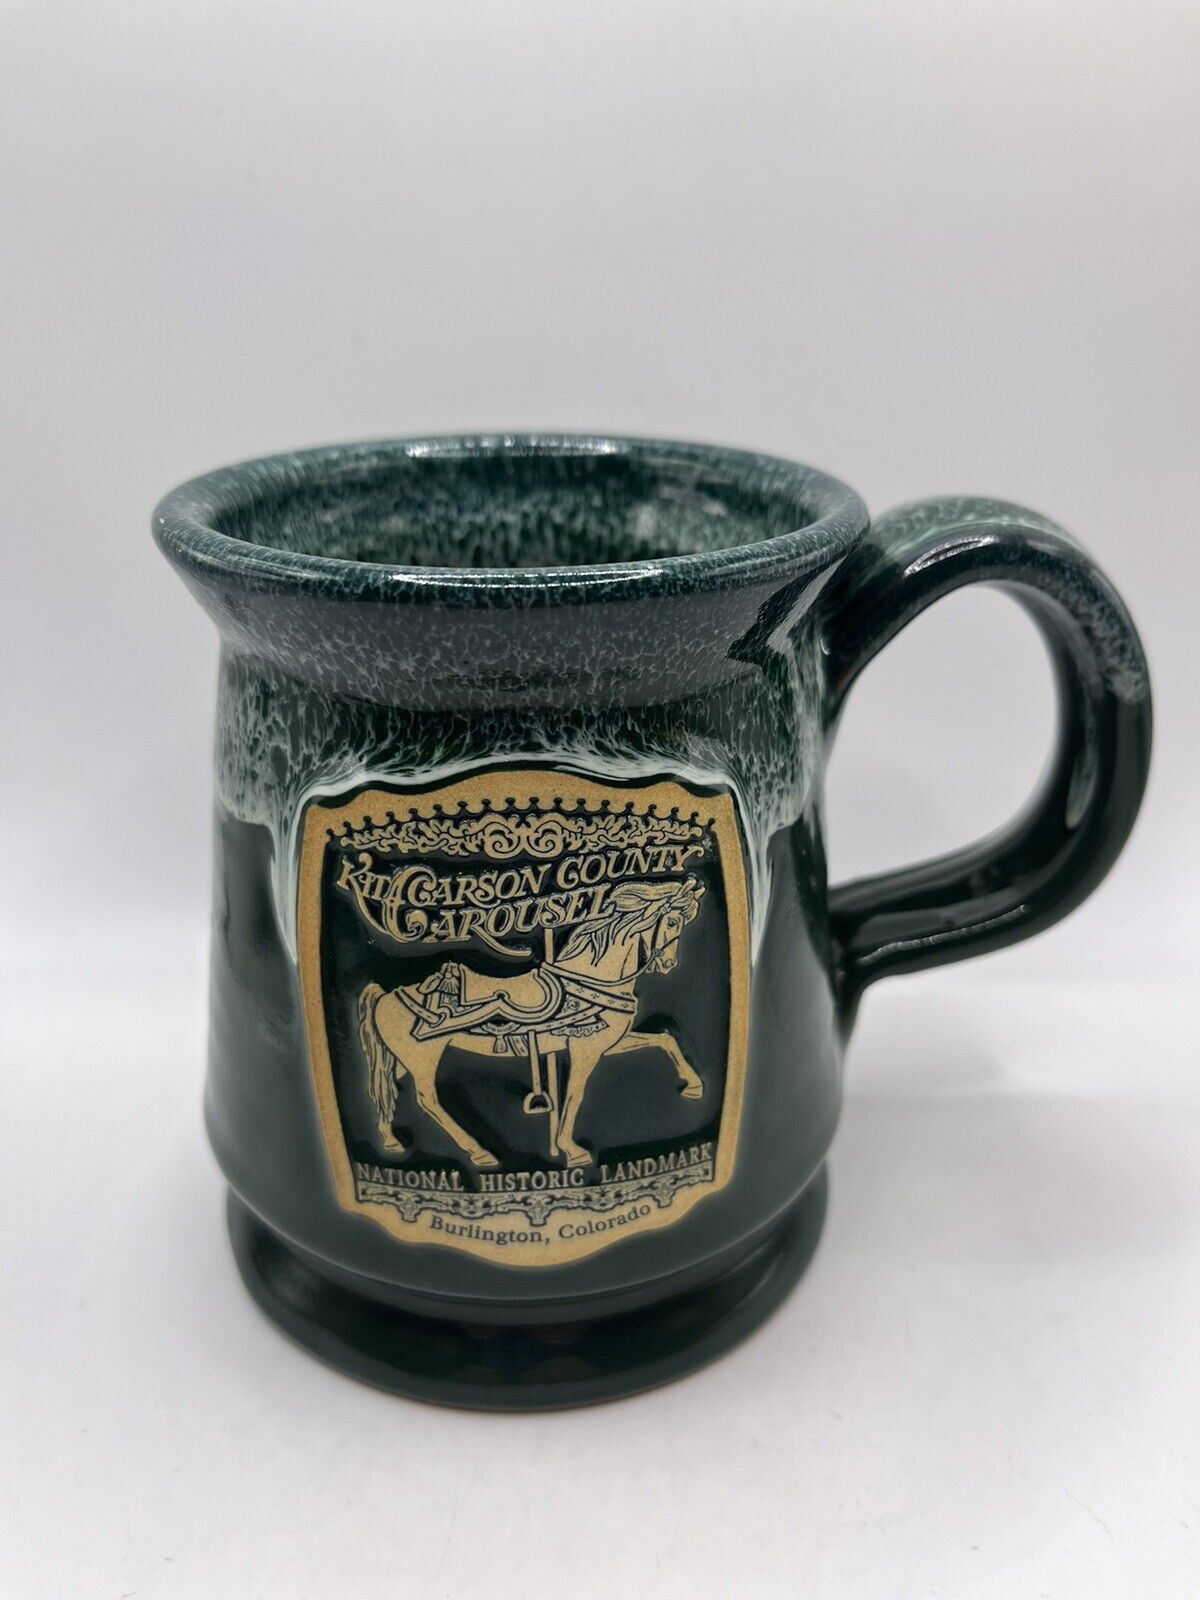 Deneen Hand Thrown Pottery Mug 2016 Kit Carson County Carousel Historical Green